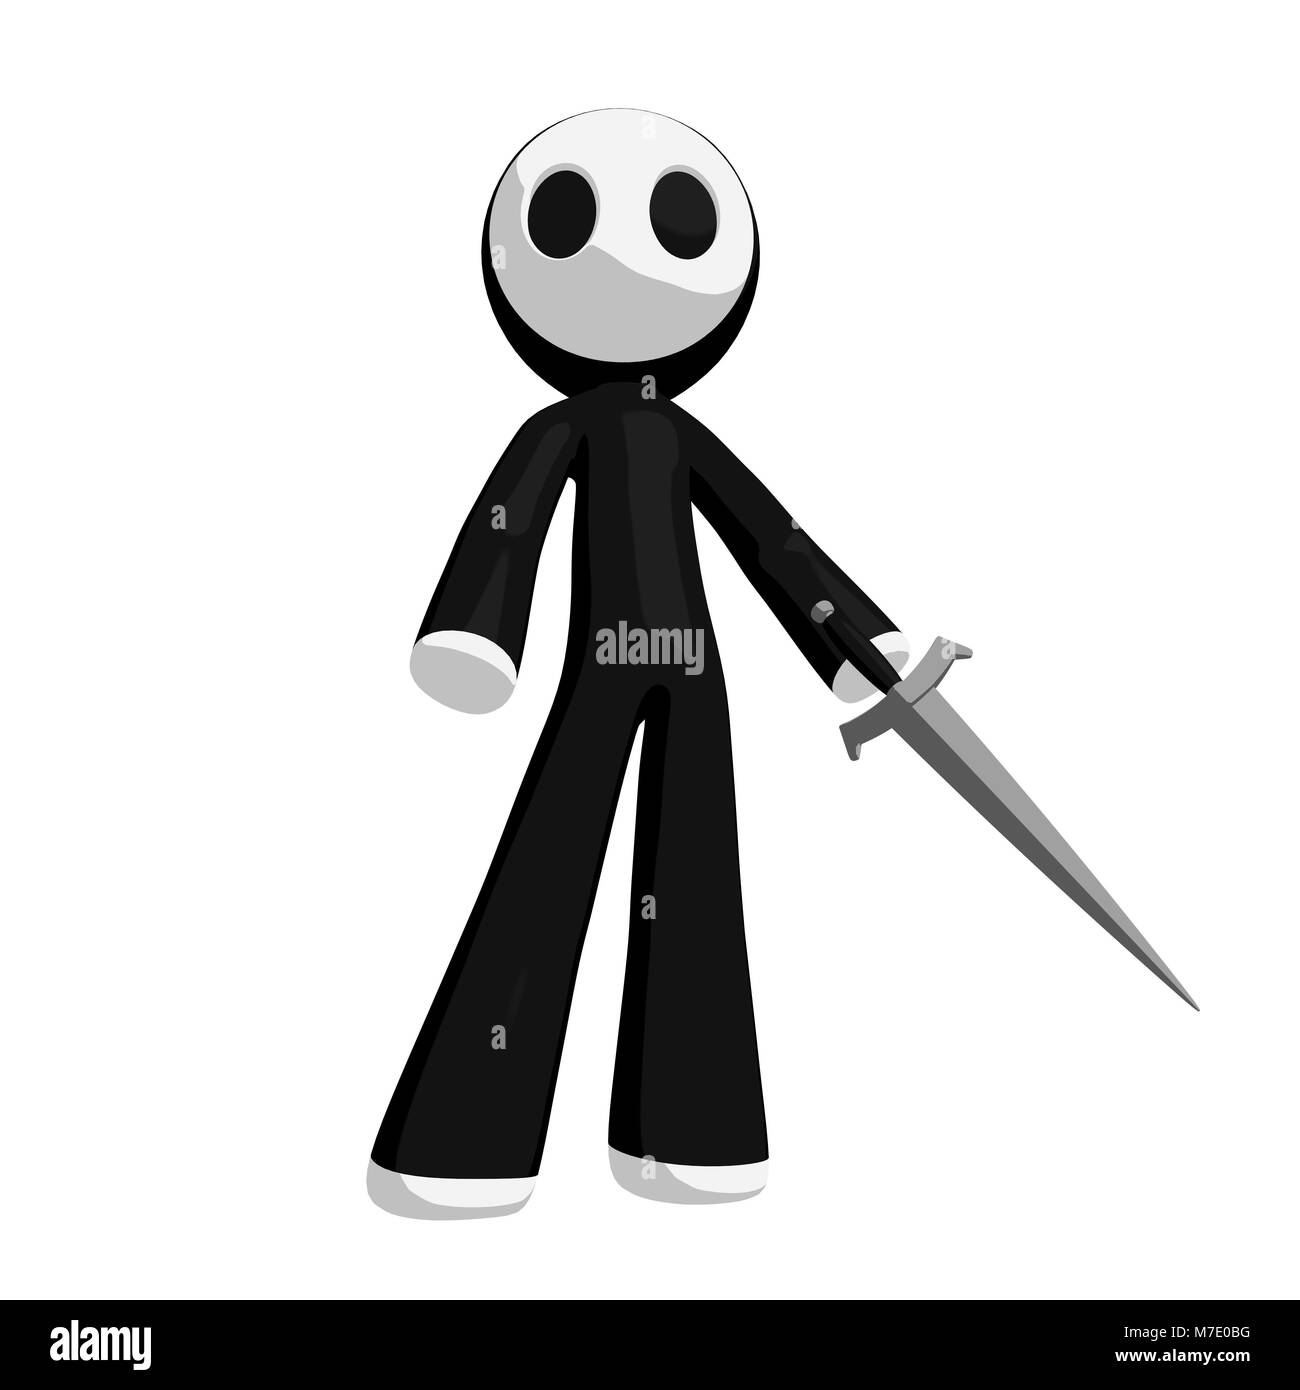 Character mascot holding sword hero pose. Stock Photo